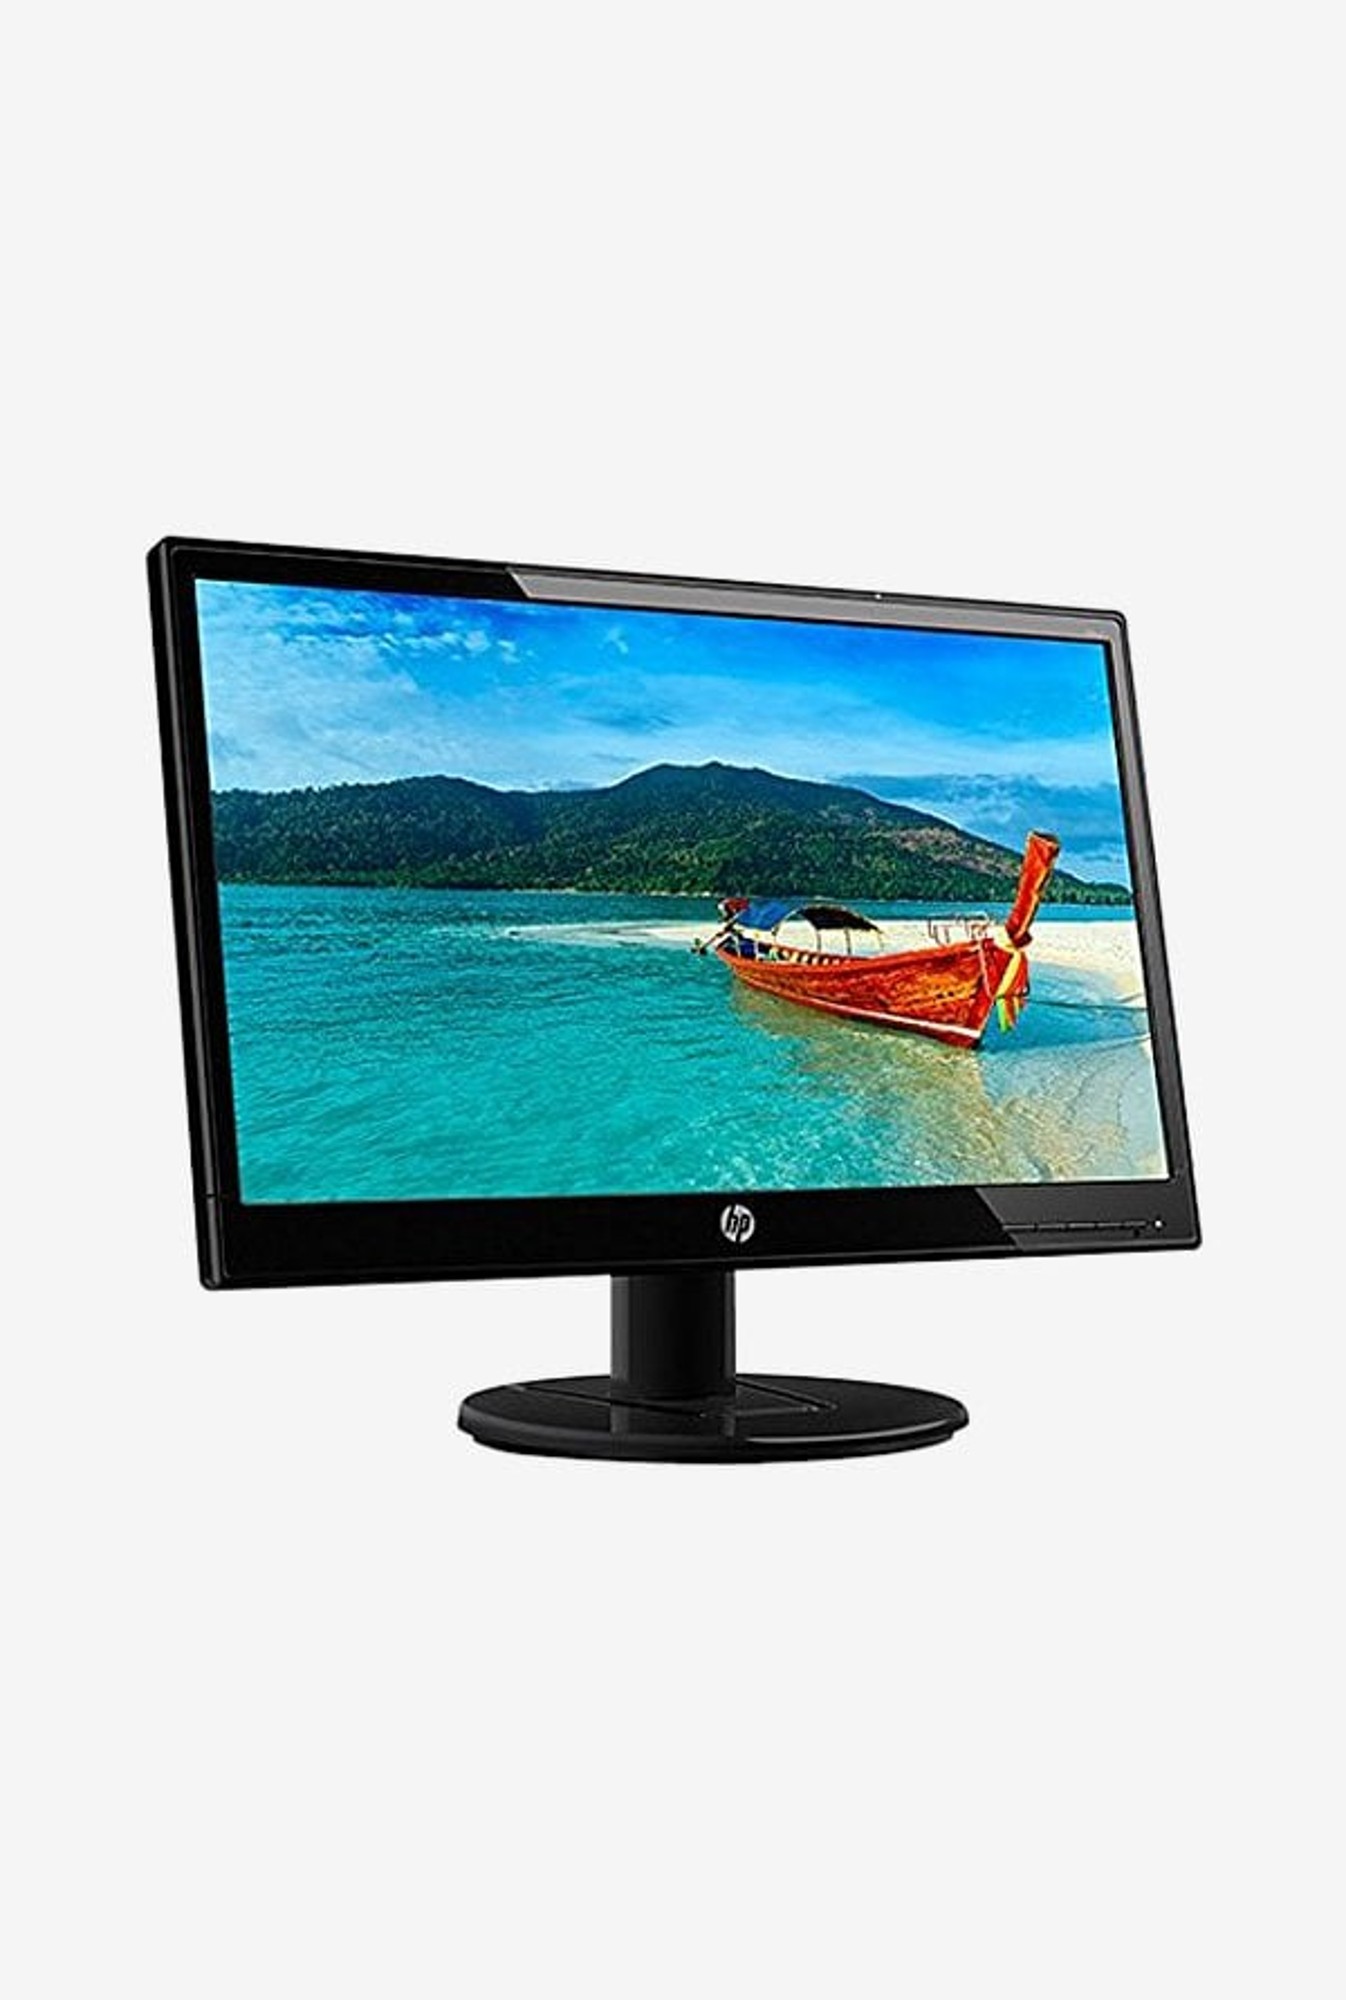 HP 19KA 46.99 cm (18.5 inch) LED Backlit Monitor +15% Discount